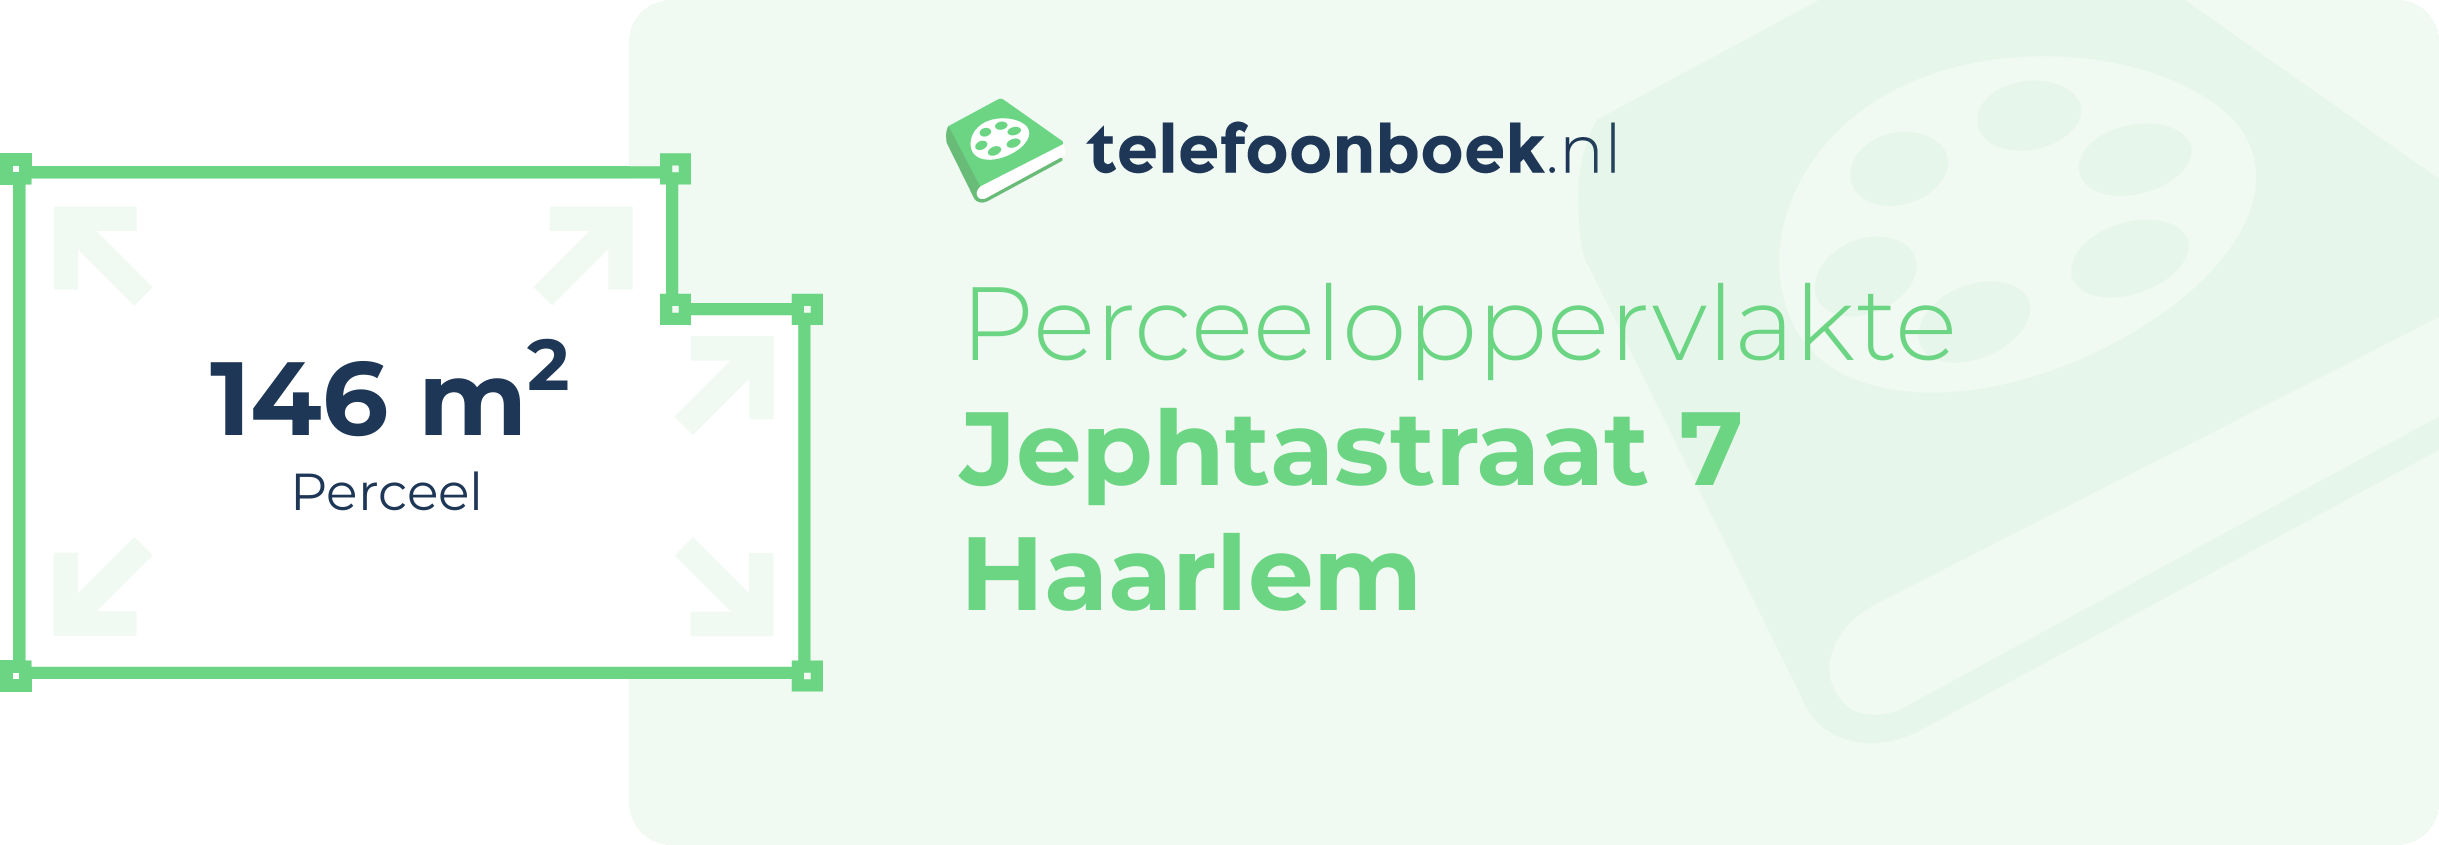 Perceeloppervlakte Jephtastraat 7 Haarlem